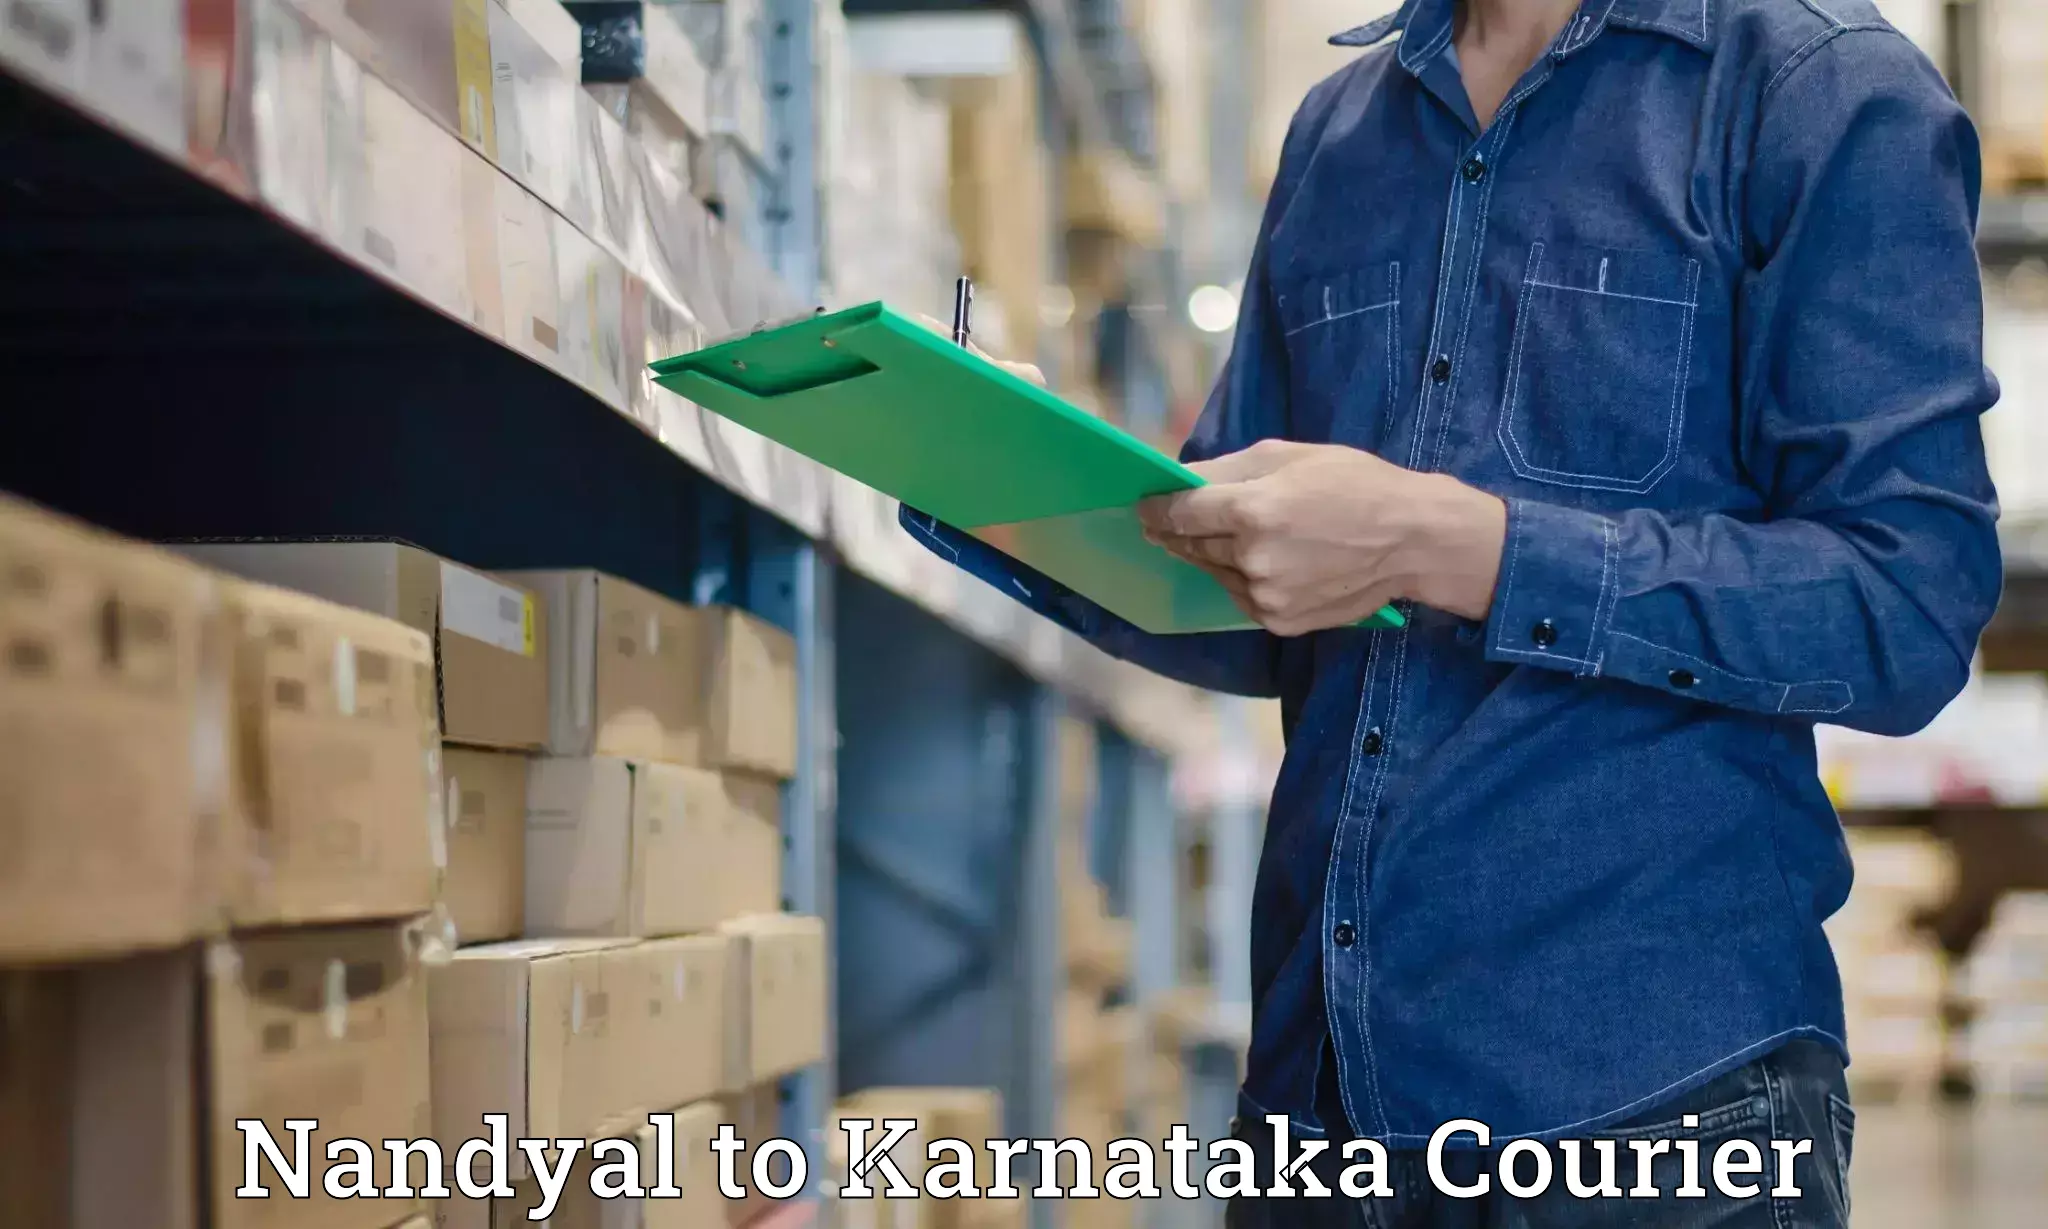 Courier service comparison Nandyal to Karkala